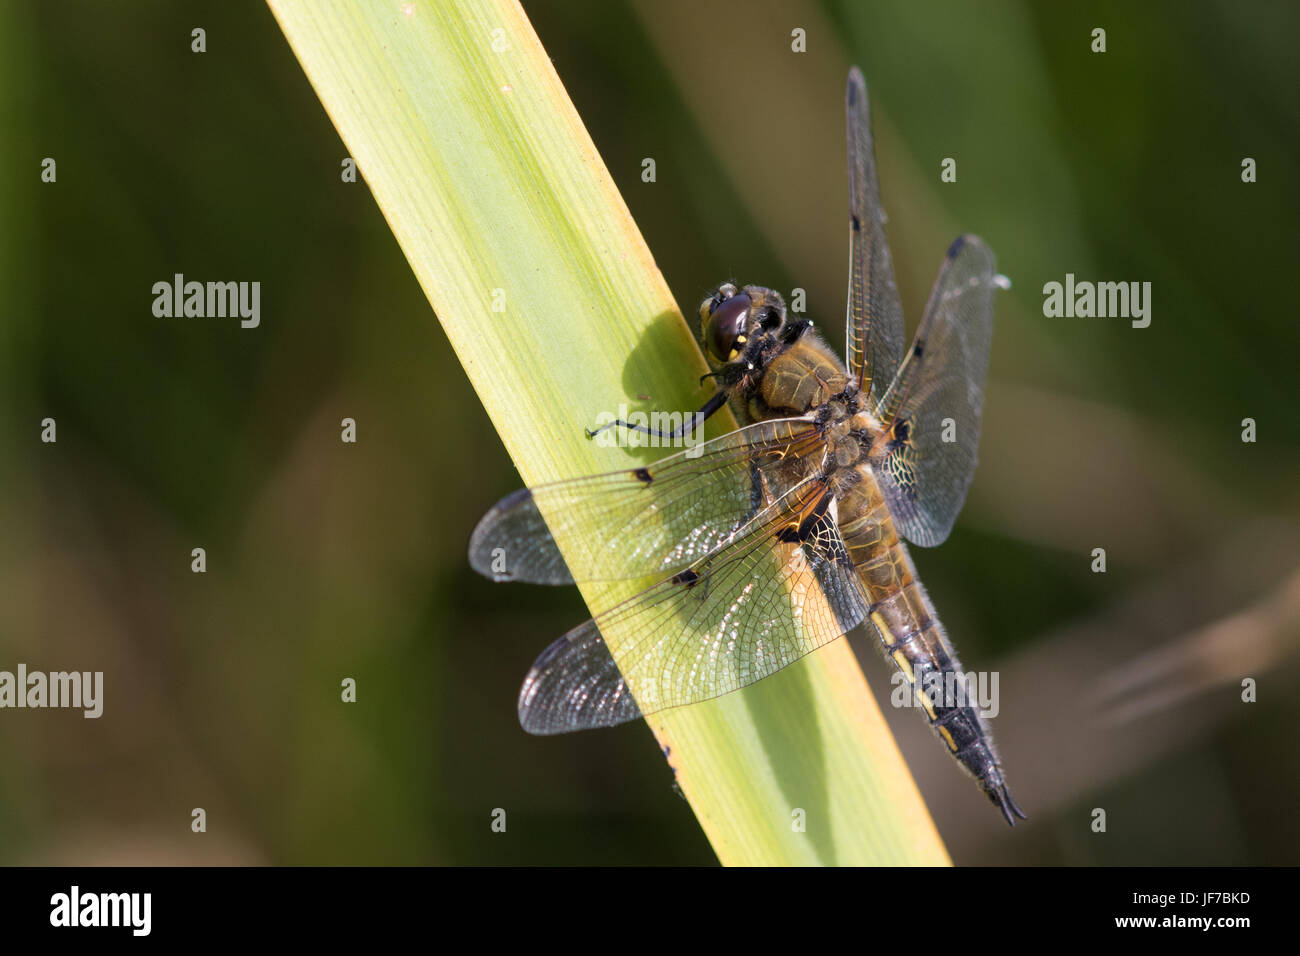 Cuatro-spotted Chaser (Libellula quadrimaculata) dragonfly descansando sobre una planta de tallo Foto de stock